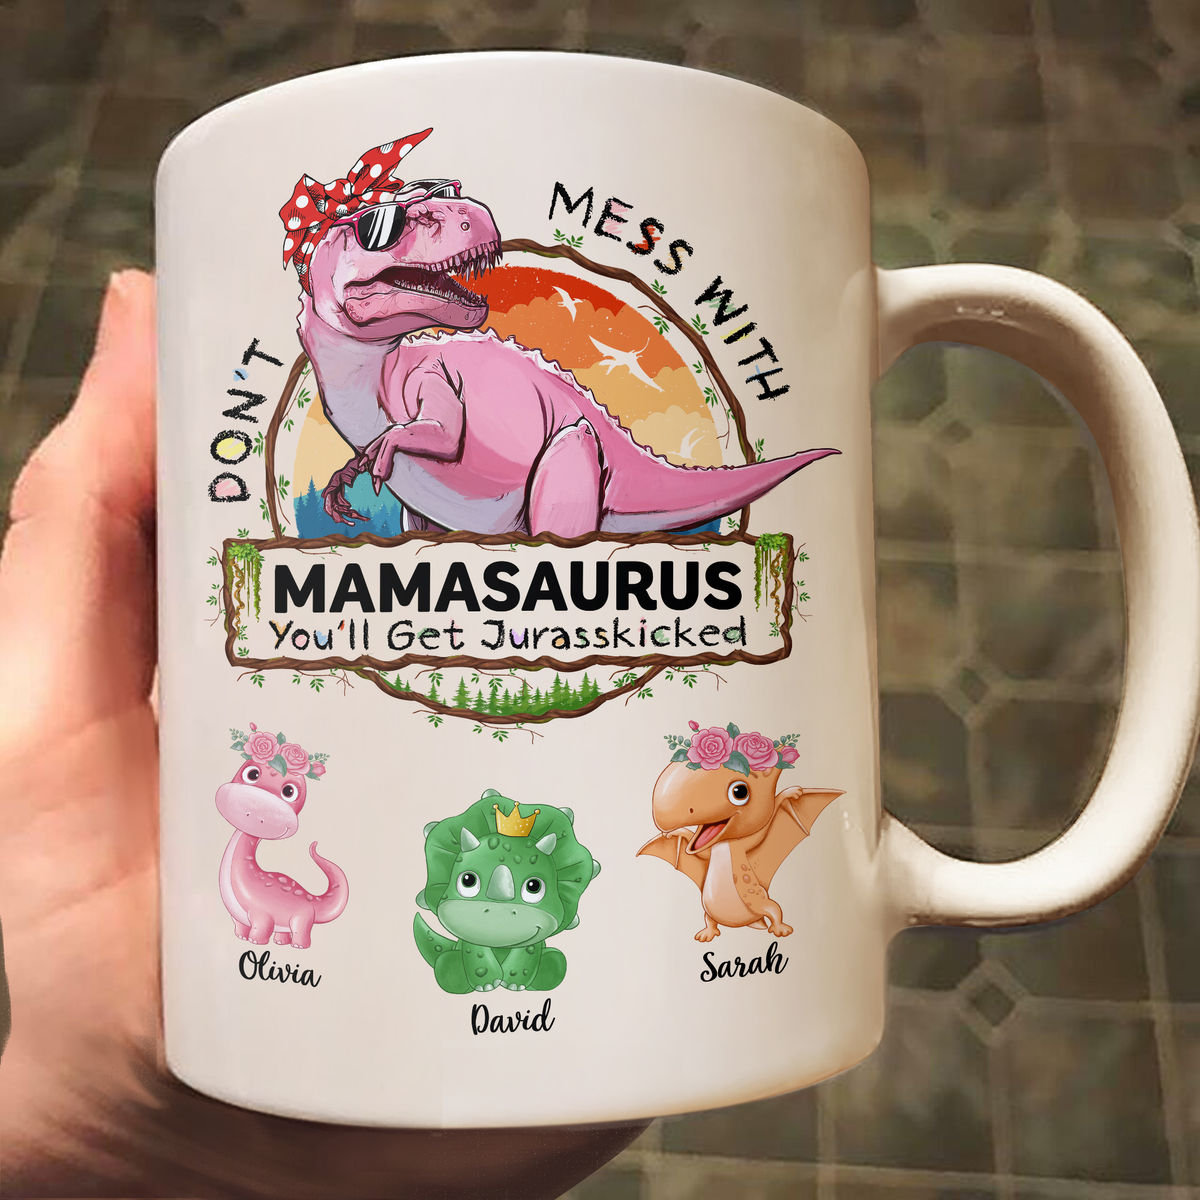 Mothers Day (Don't Mess With Mama Bear) Morphing Mugs Heat-Sensitive Mug